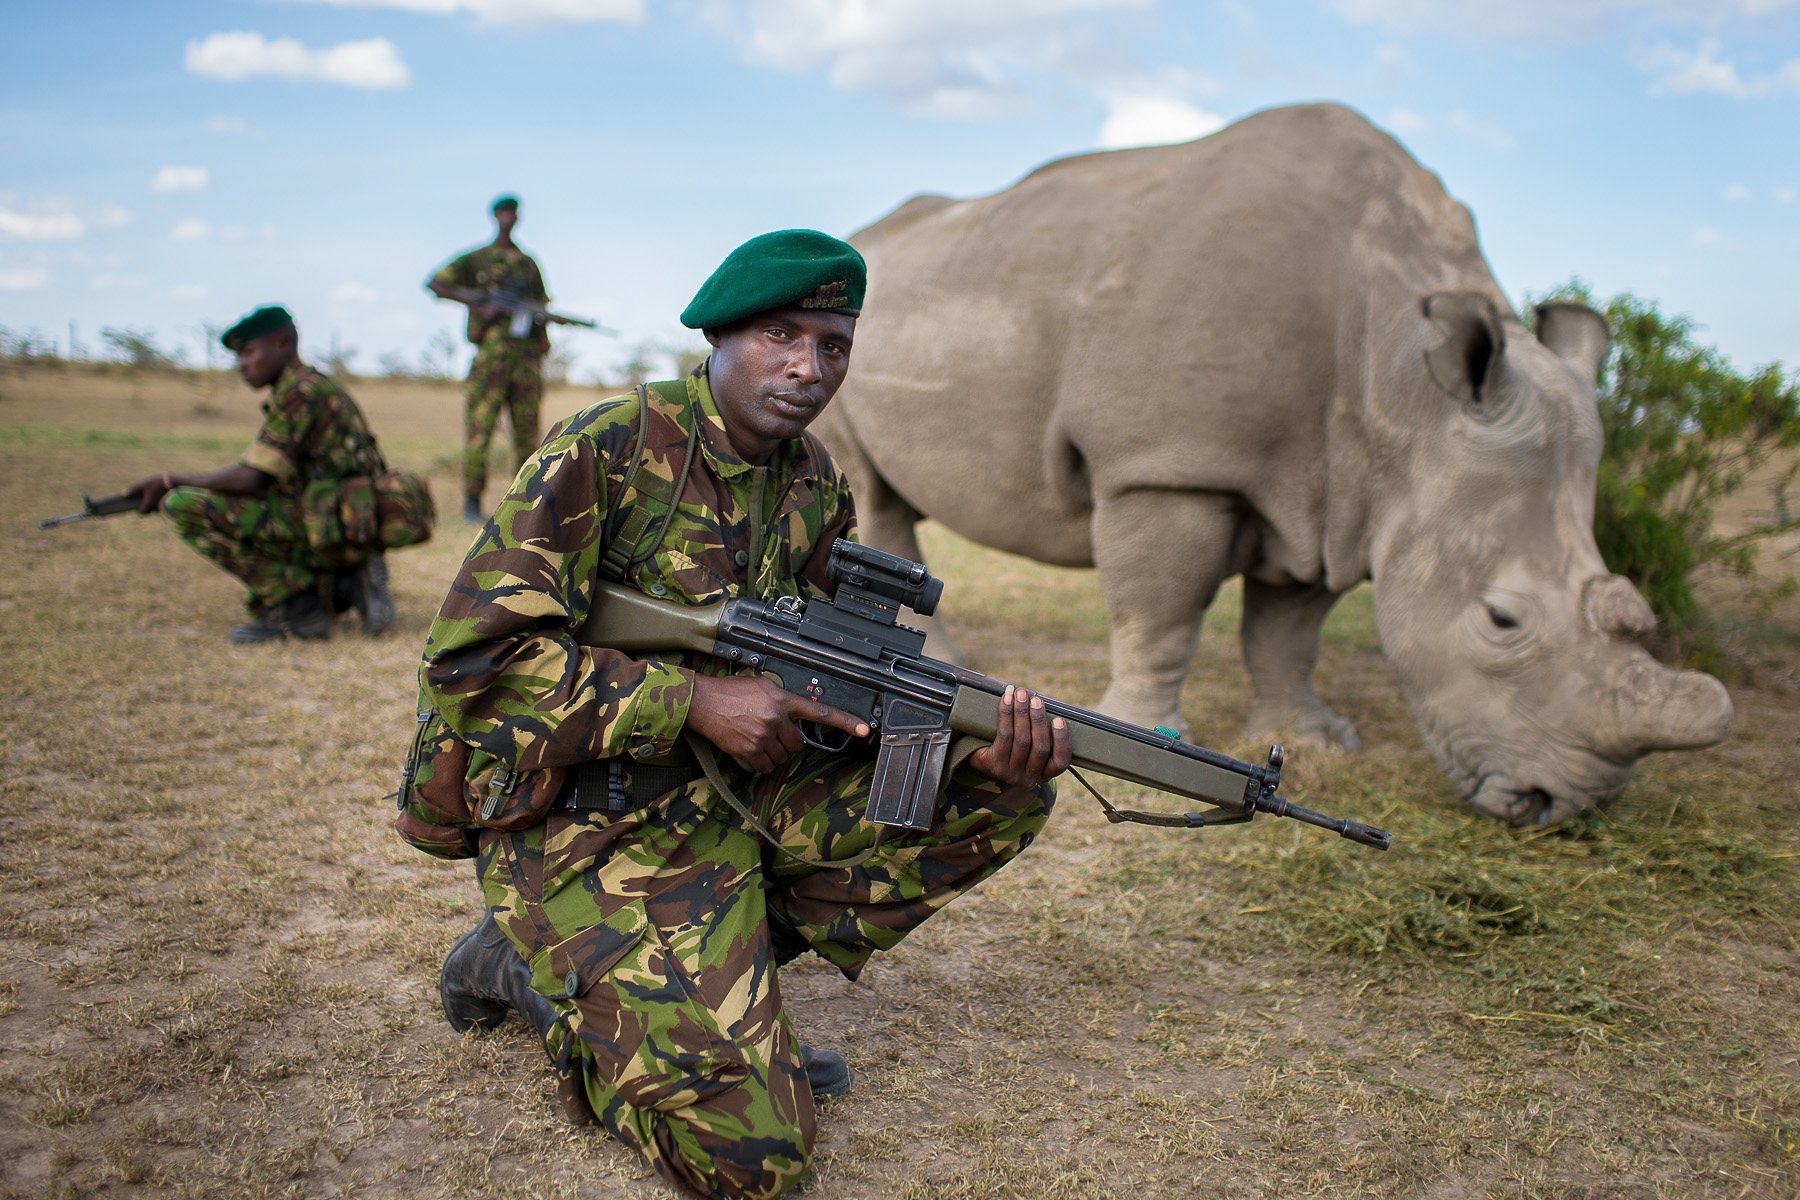 Rhino bodyguards